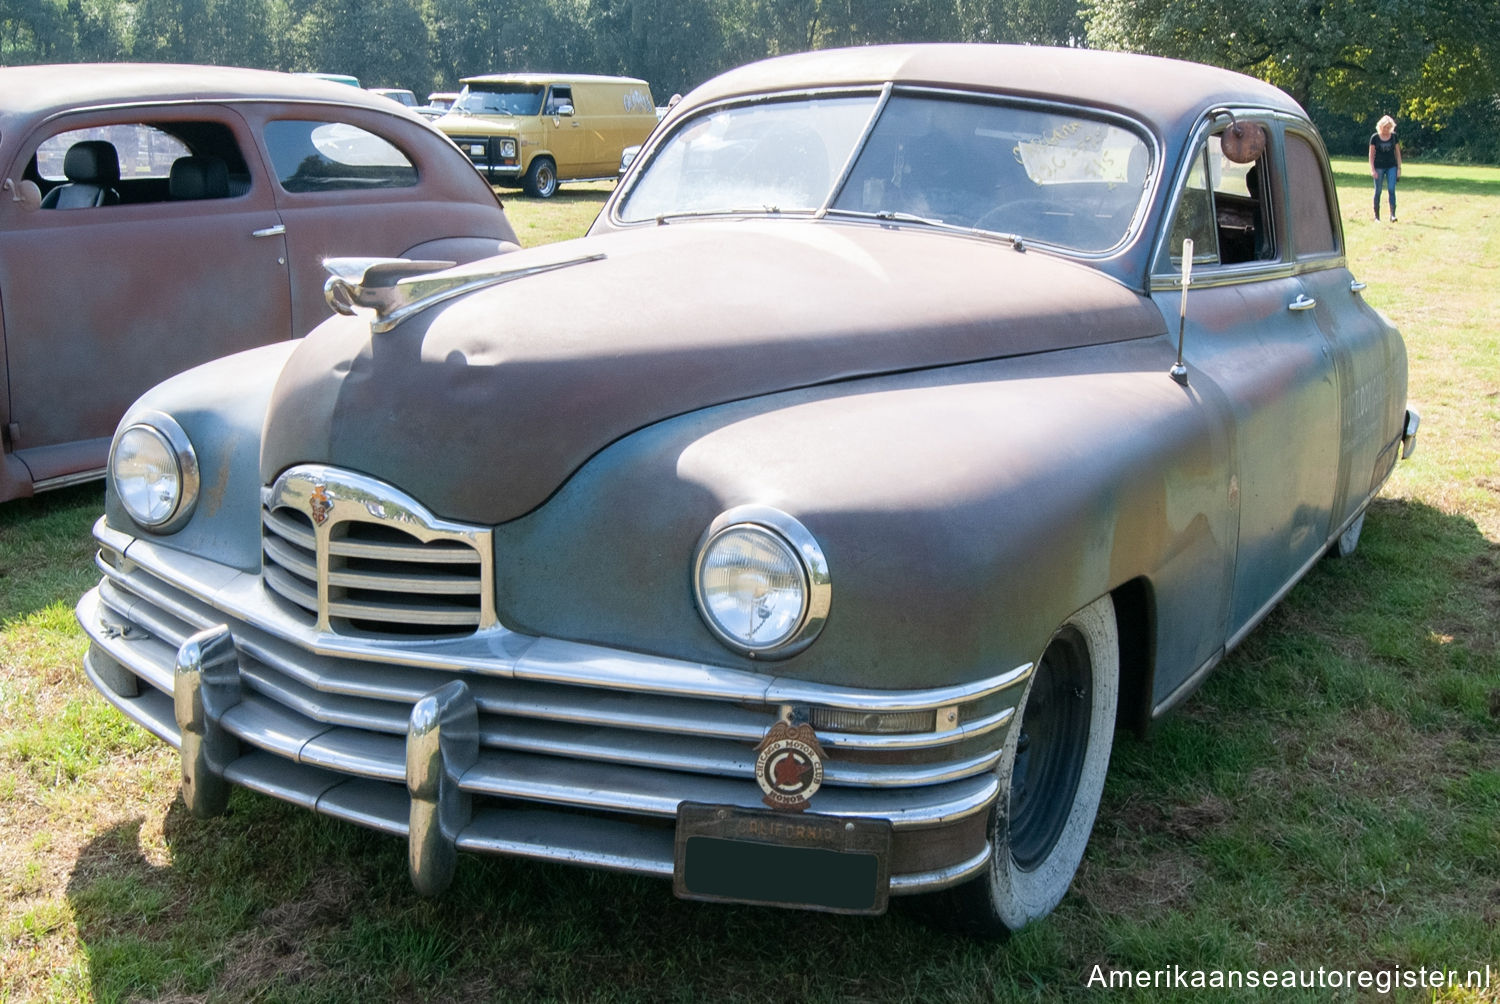 Kustom Packard uit 1949